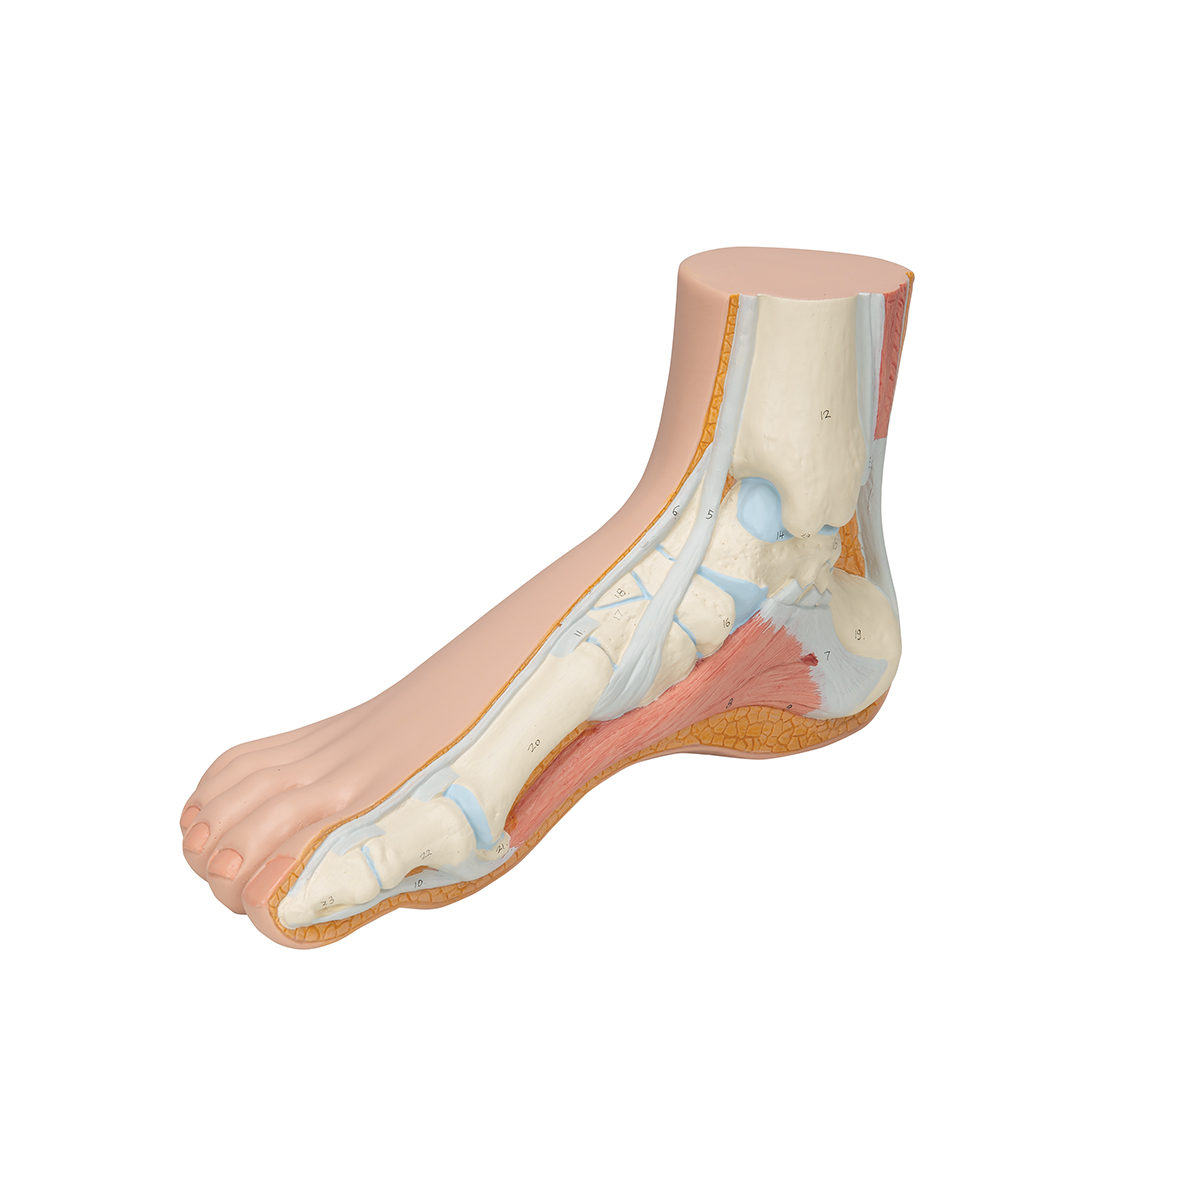 Anatomical Teaching Models - Plastic Human Joint Models - Foot Model